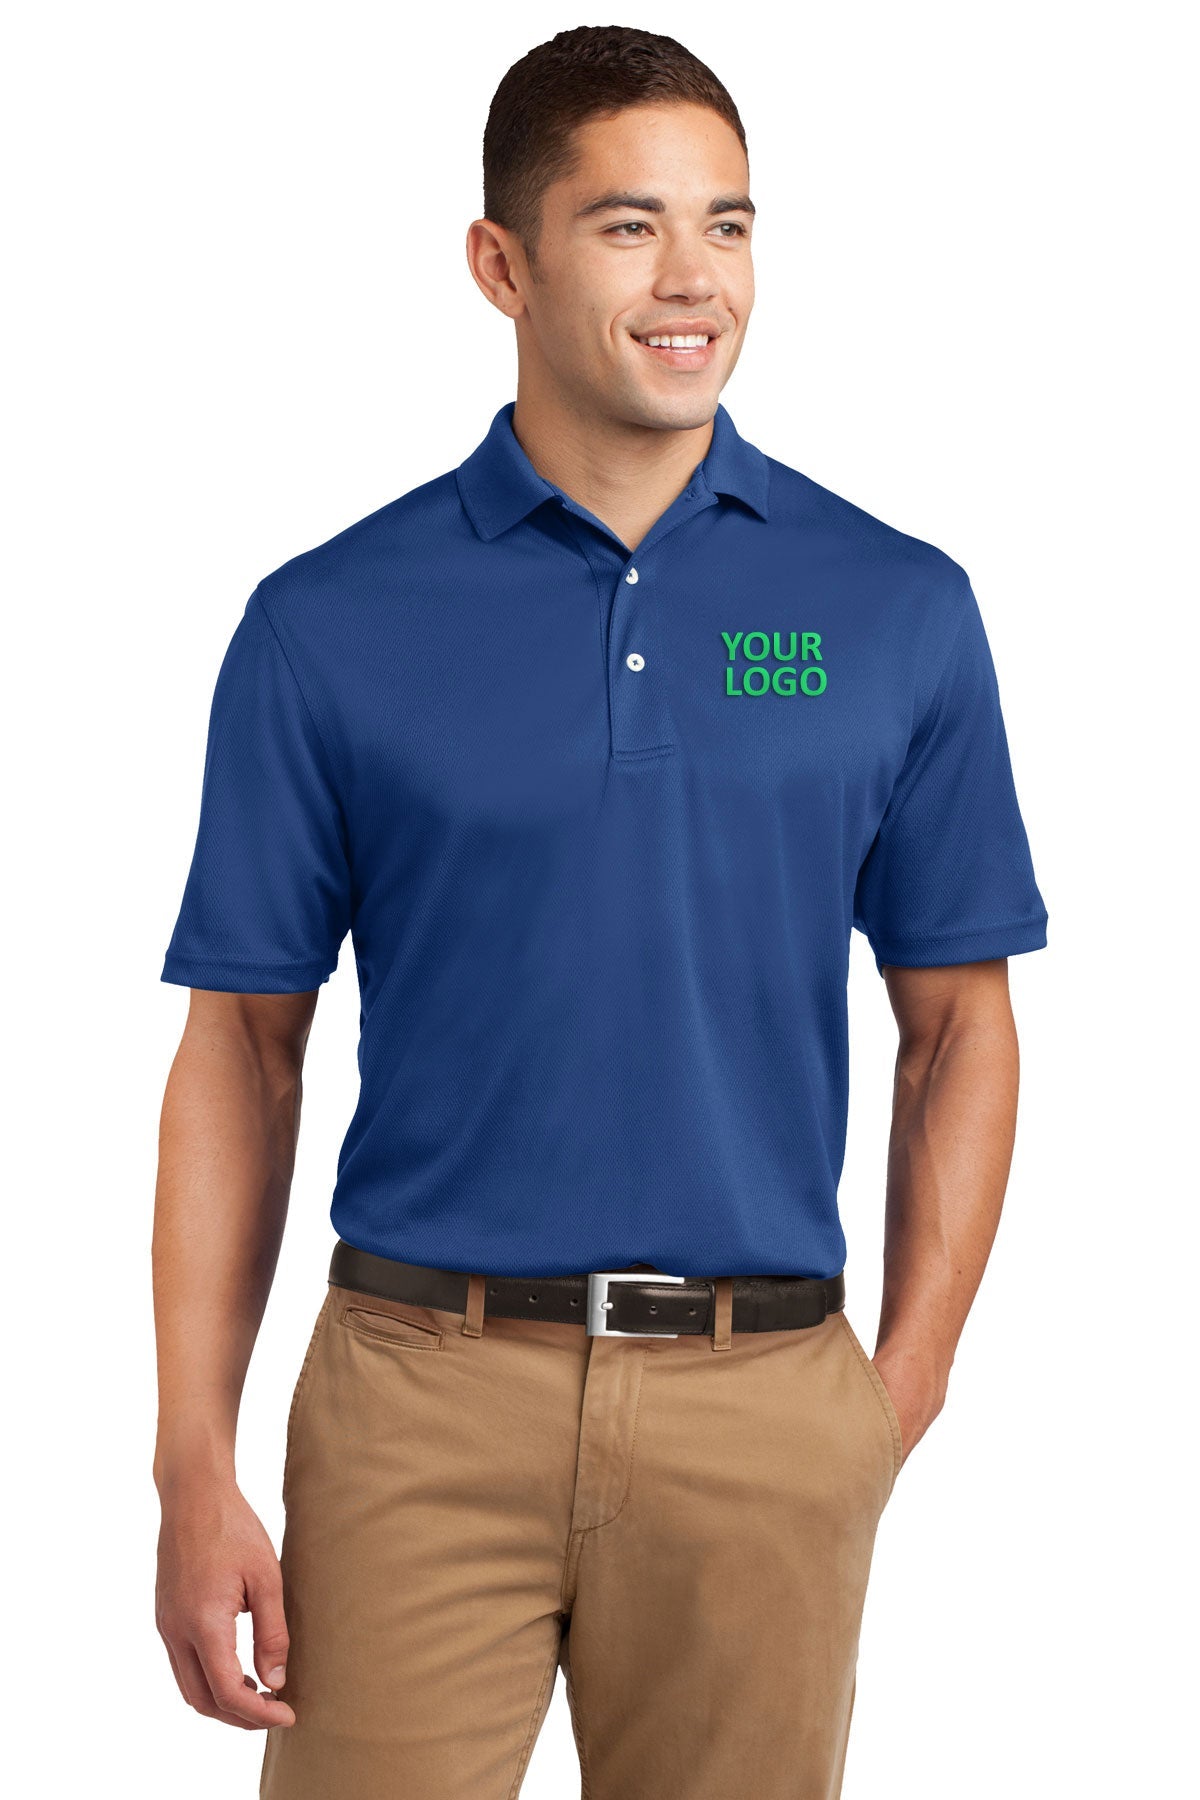 Sport-Tek Royal TK469 business polo shirts embroidered